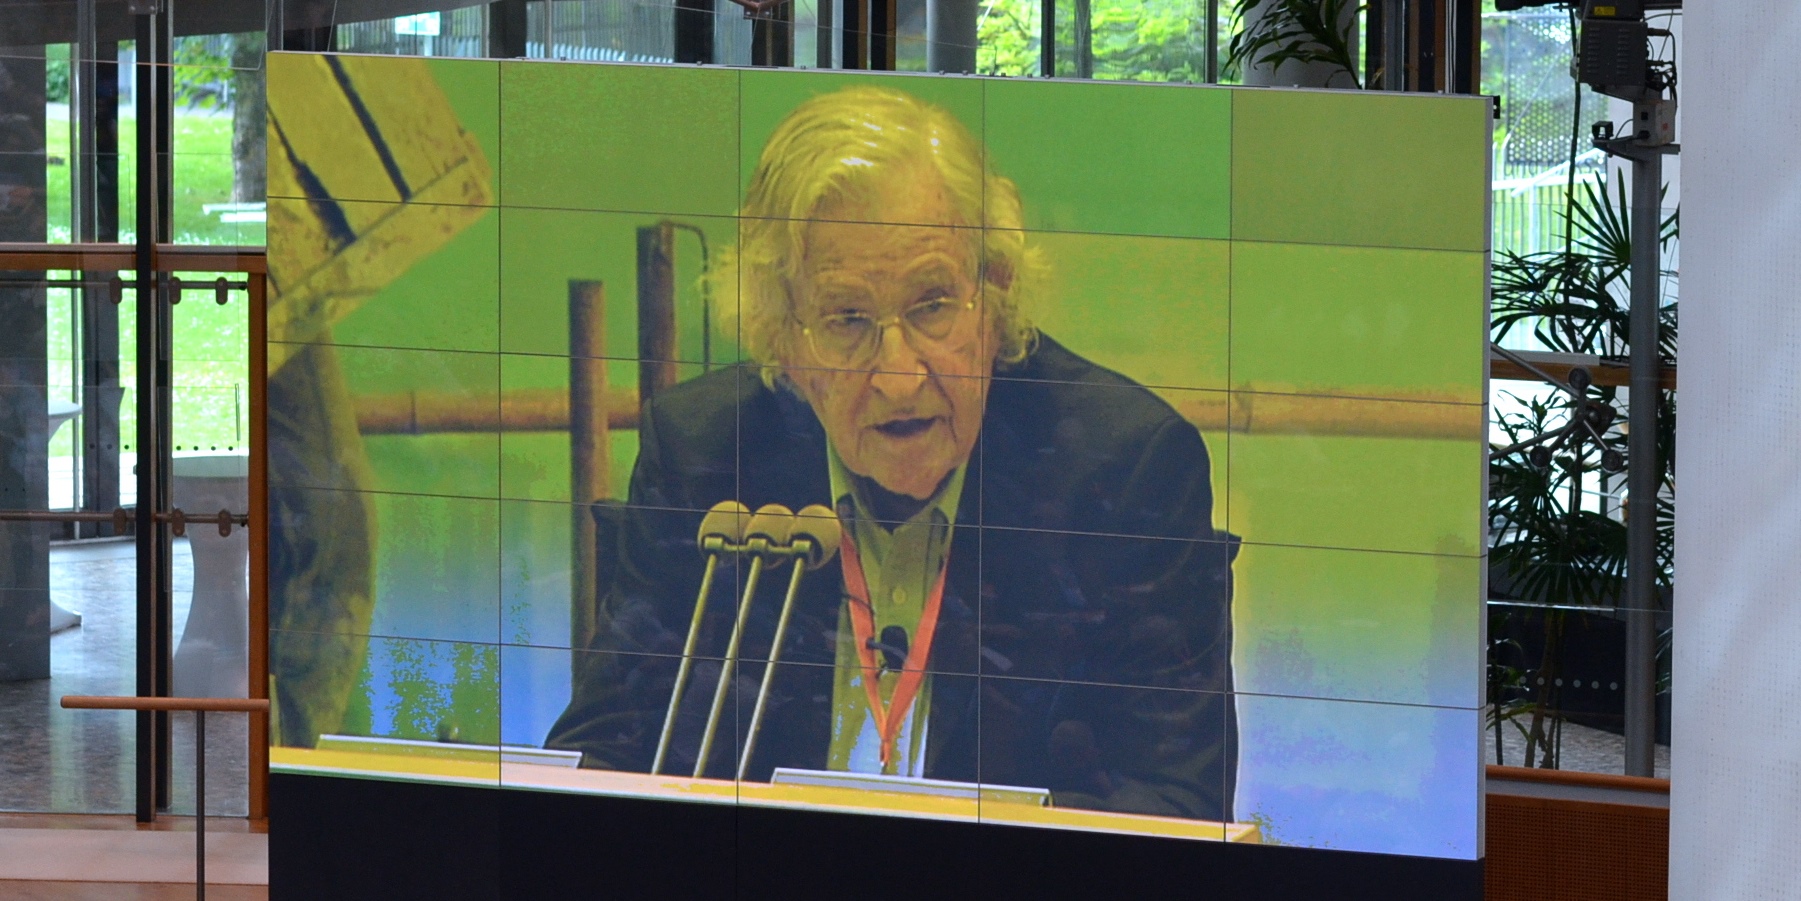 Noam Chomsky broadcast on the big screen at the Global Media Forum, June 2013, Bonn, Germany